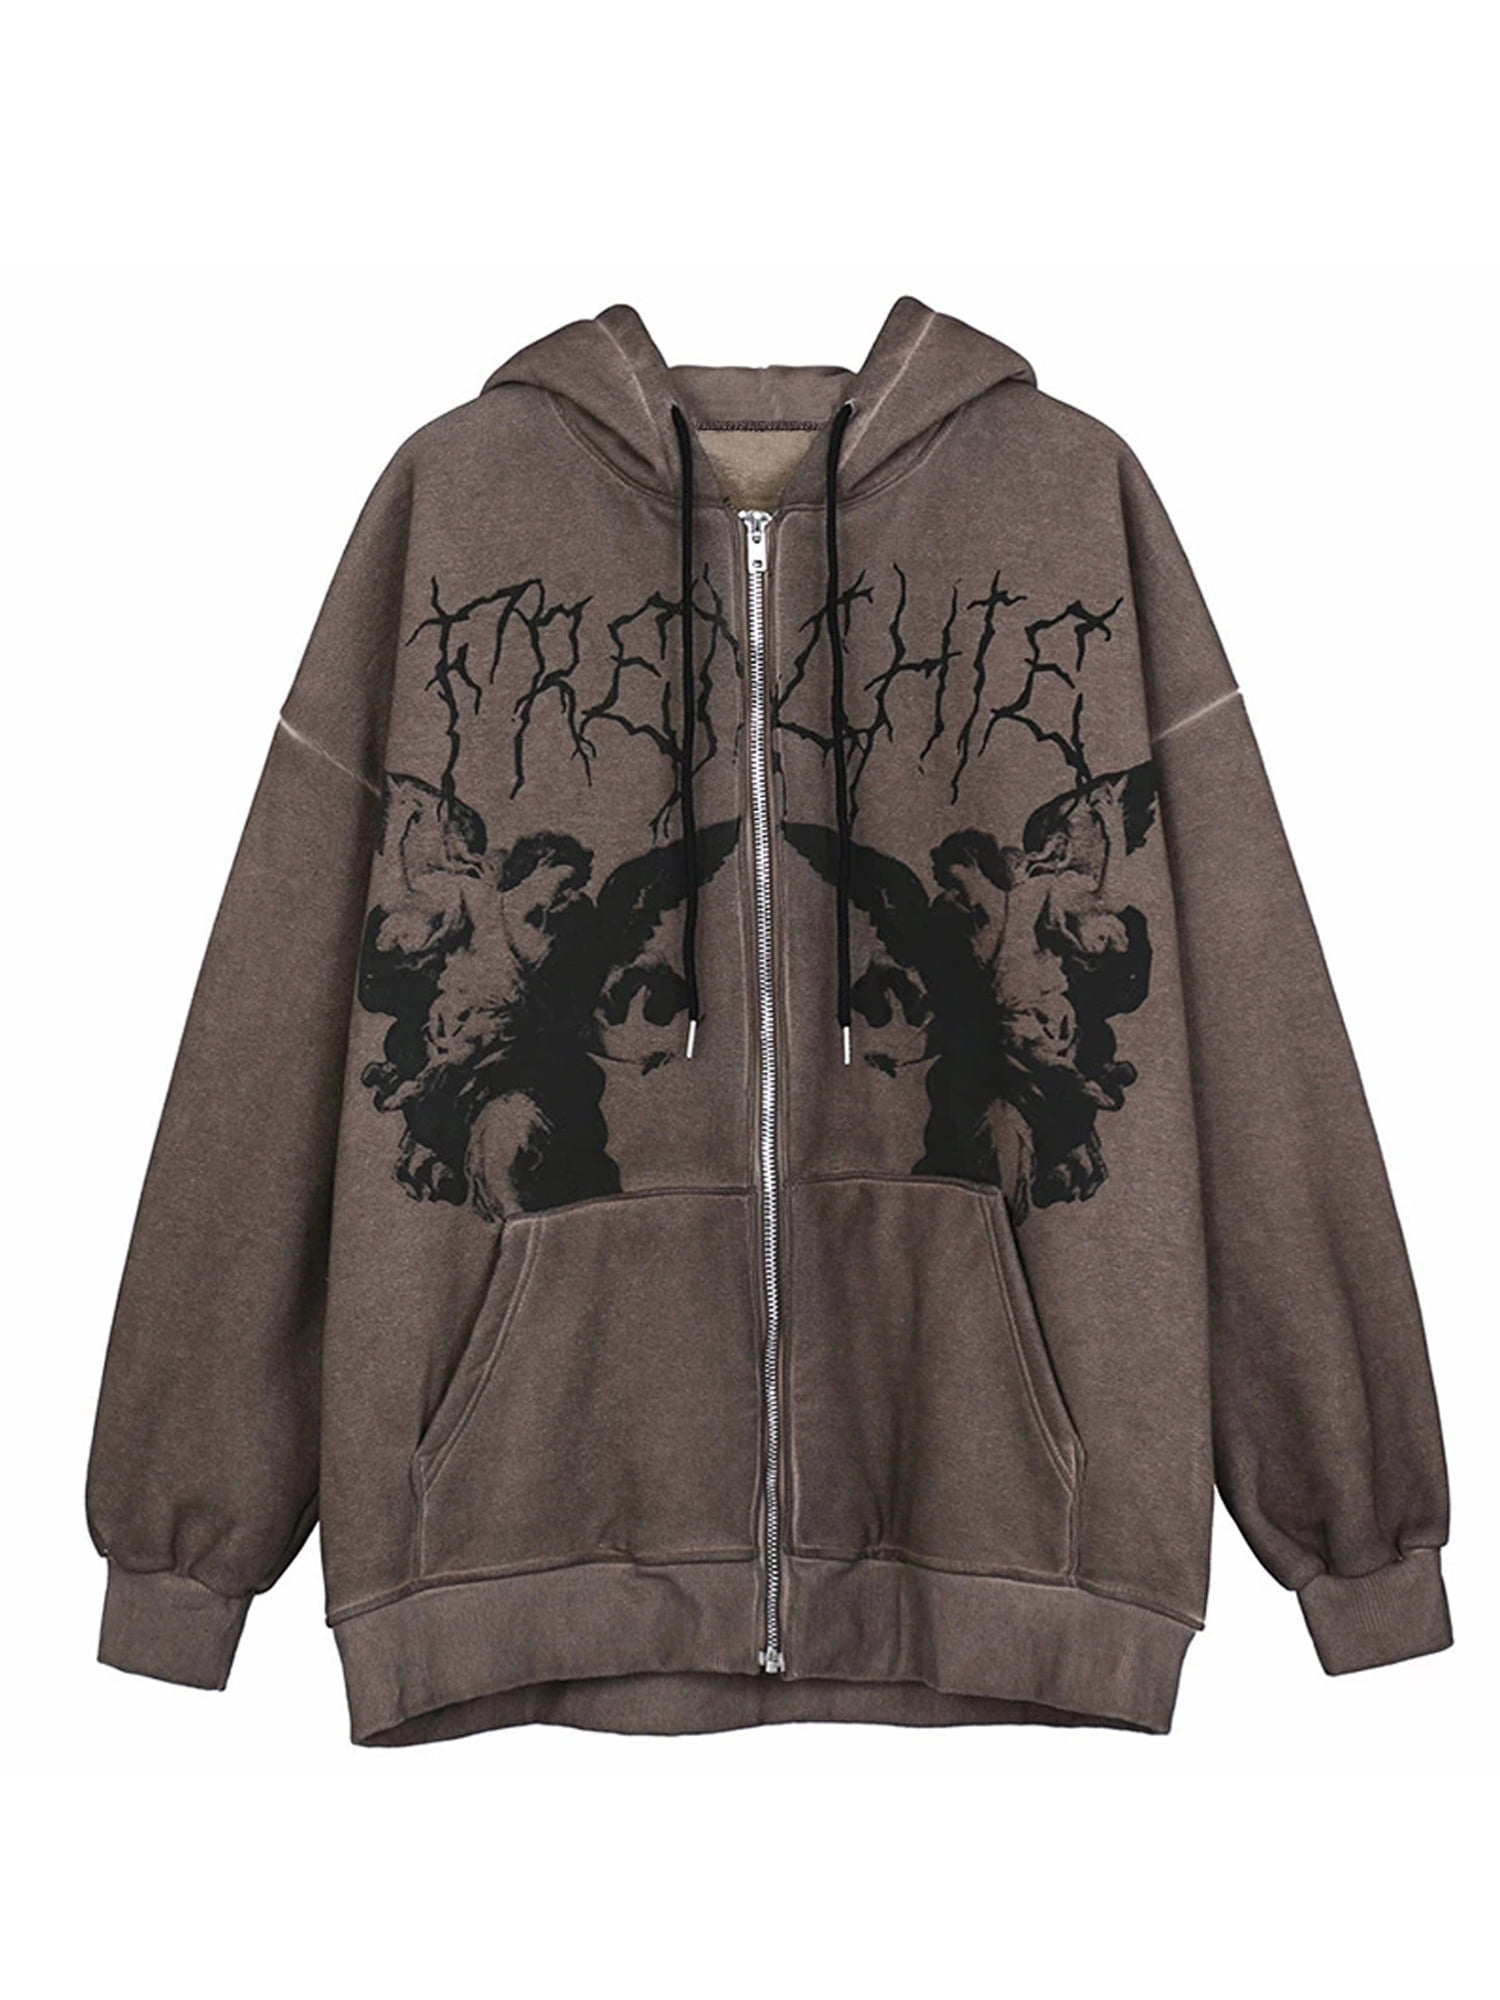 Women/’s Oversized Y2K Sweatshirt Long Sleeve Zip up Punk Goth Printed Hoodie Aesthetic Drawstring Jacket with Pockets